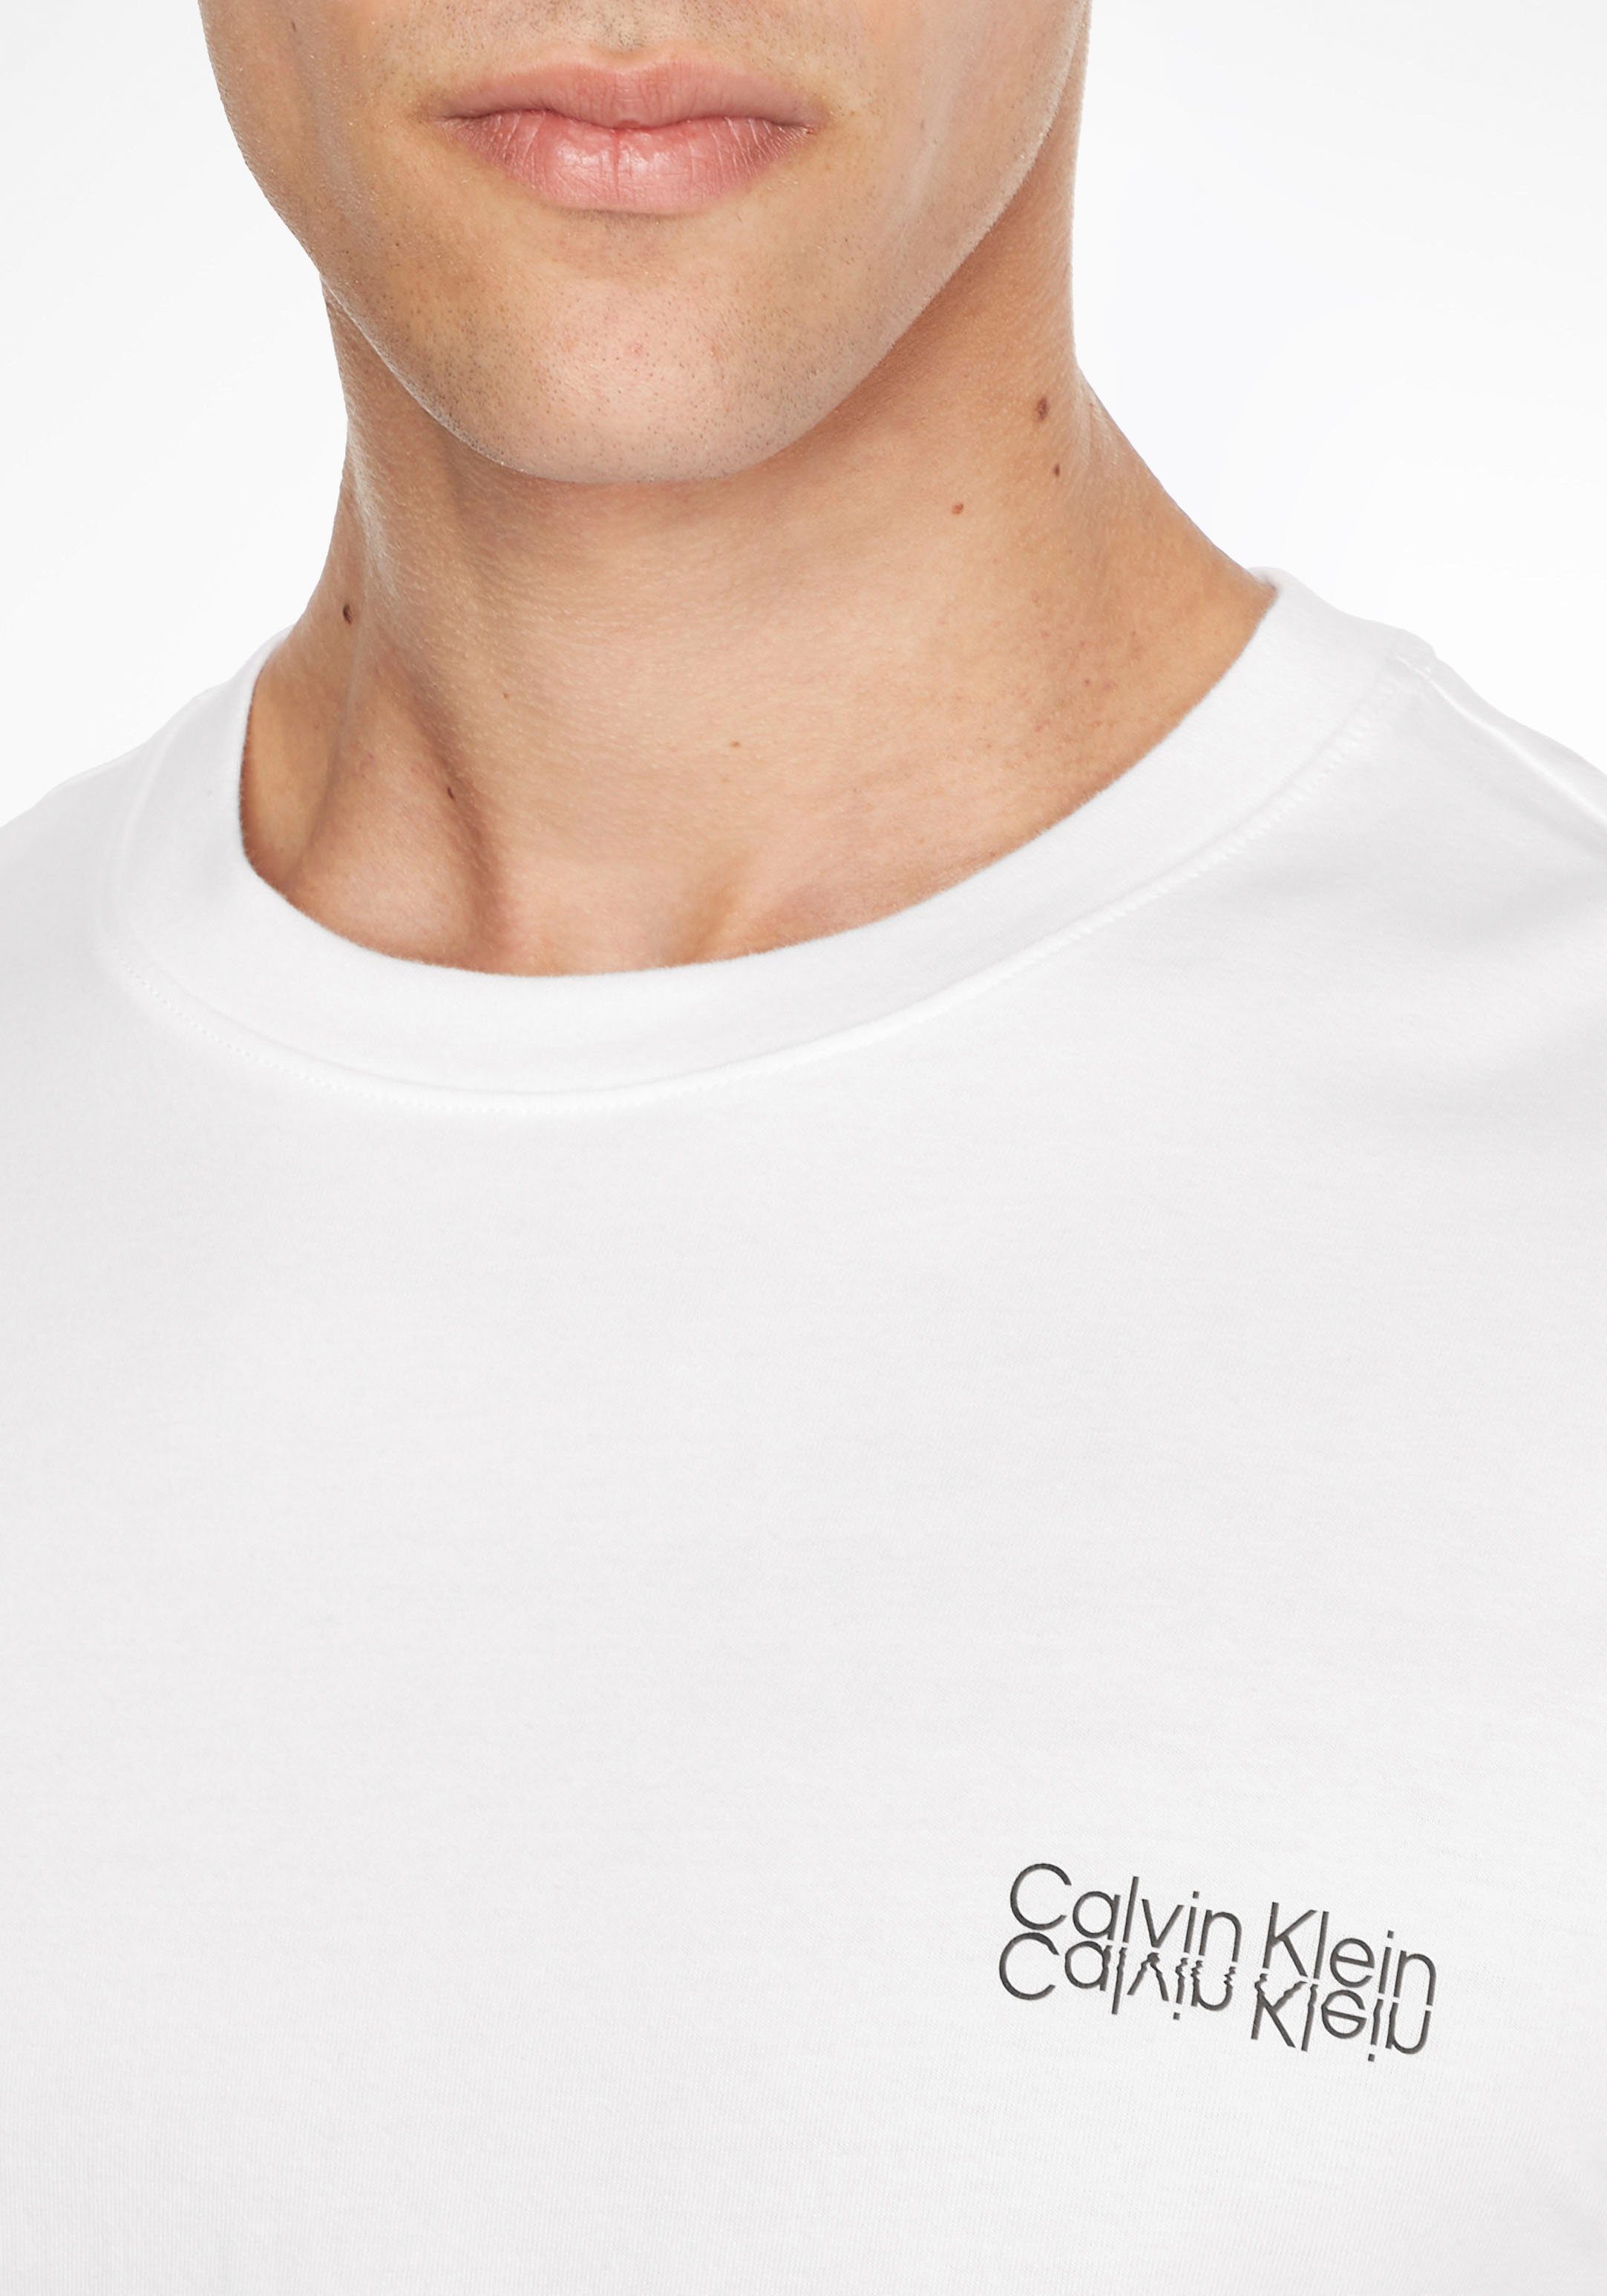 Klein LOGO white MIRRORED Langarmshirt bright Calvin